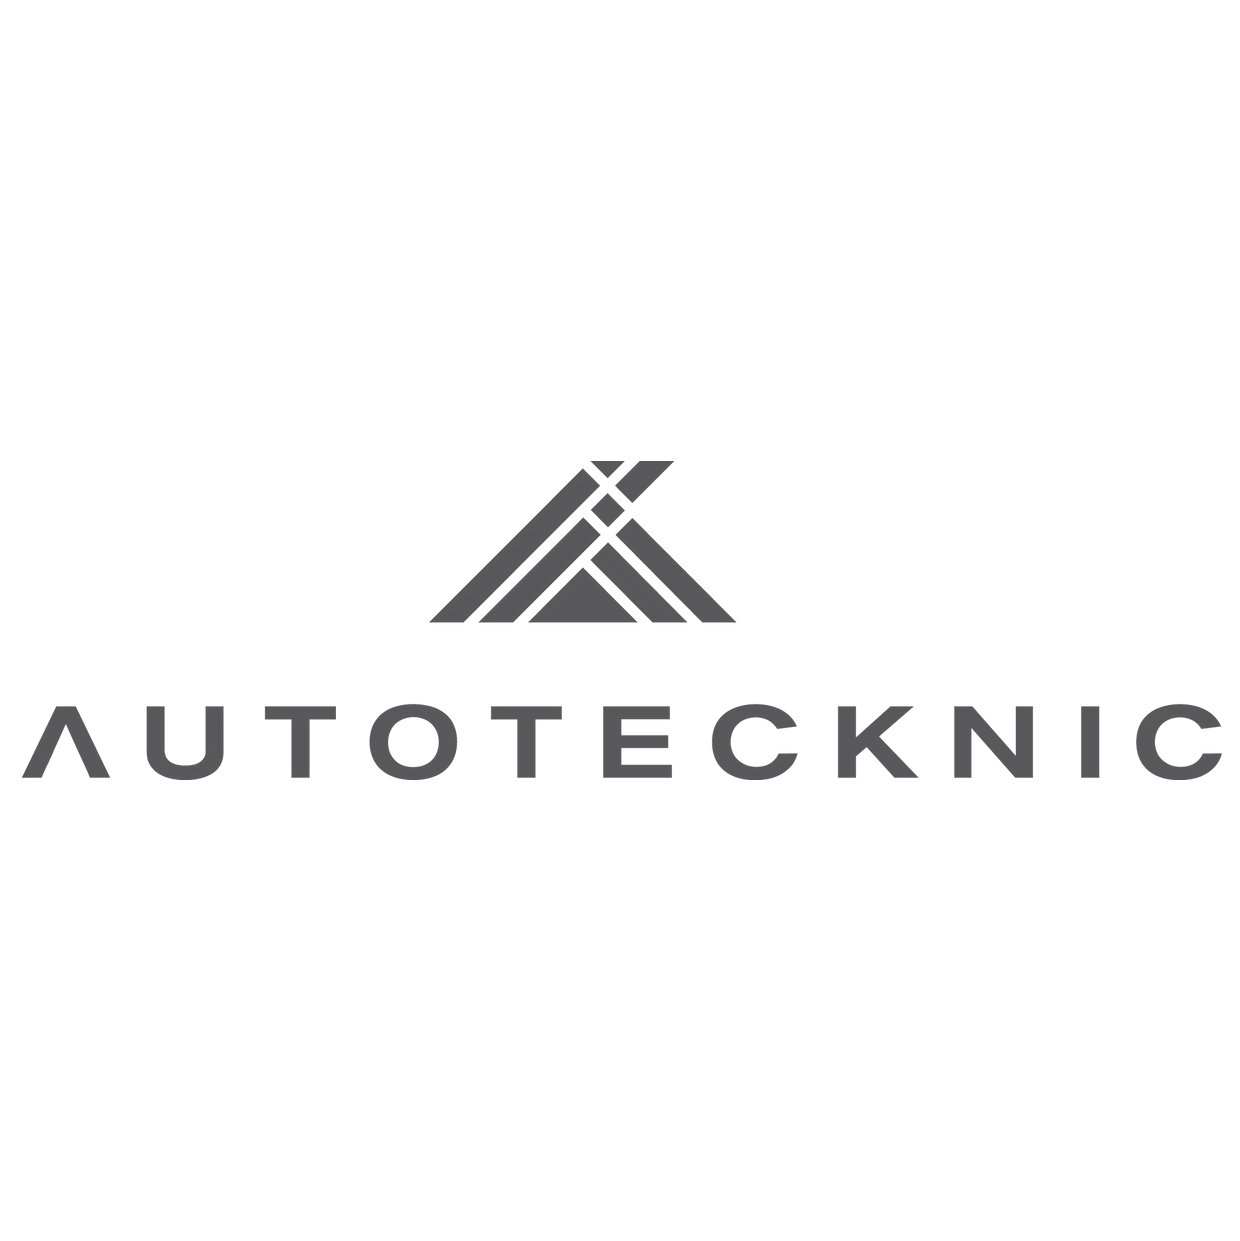 AutoTecknic